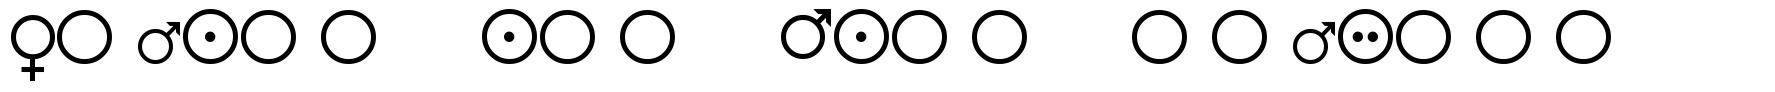 Female and Male Symbols шрифт